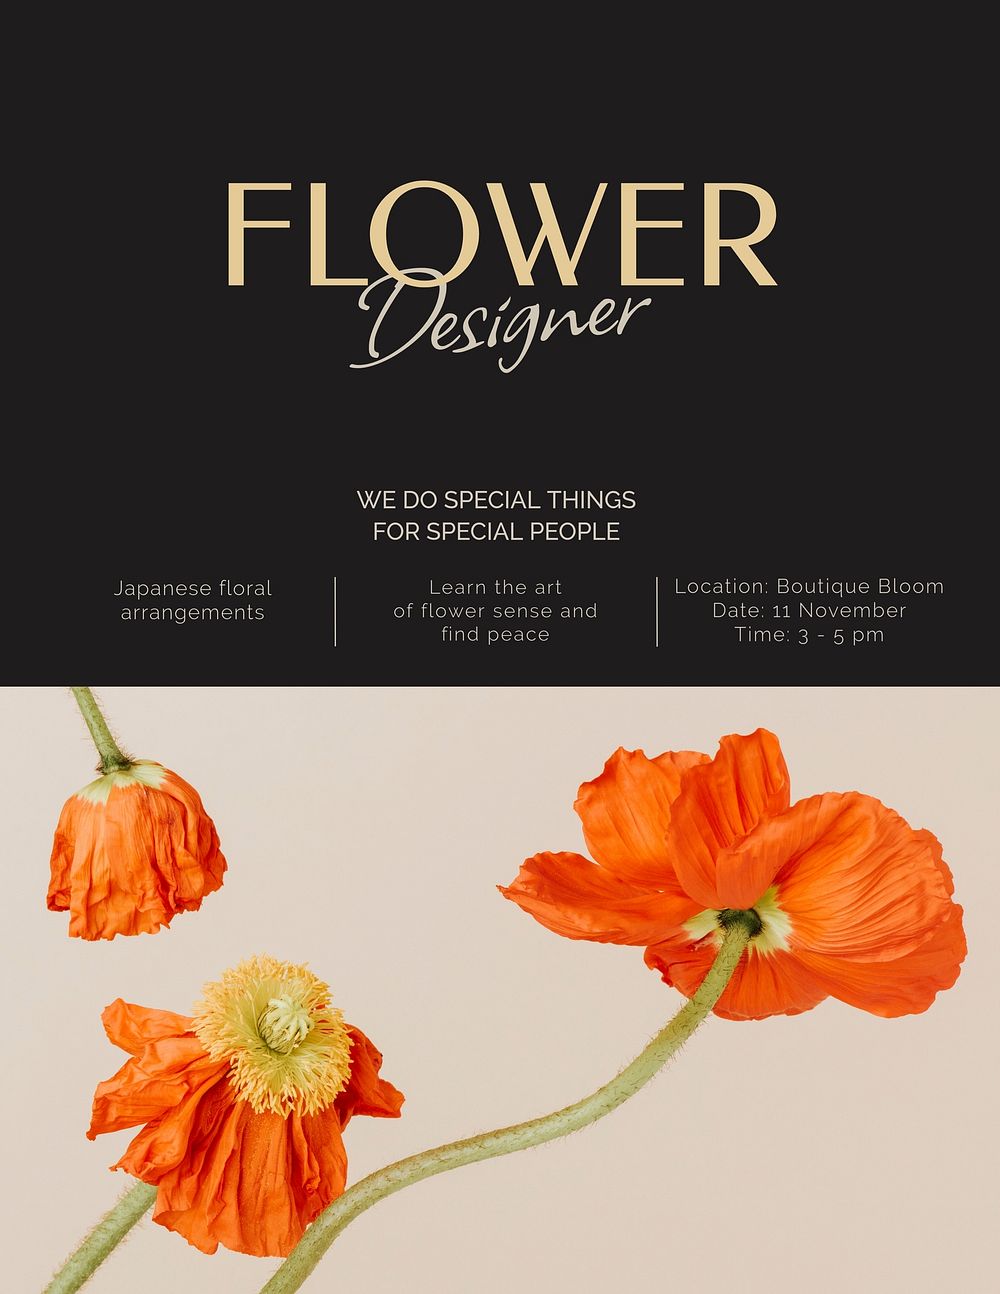 Flower designer flyer editable template, event advertisement